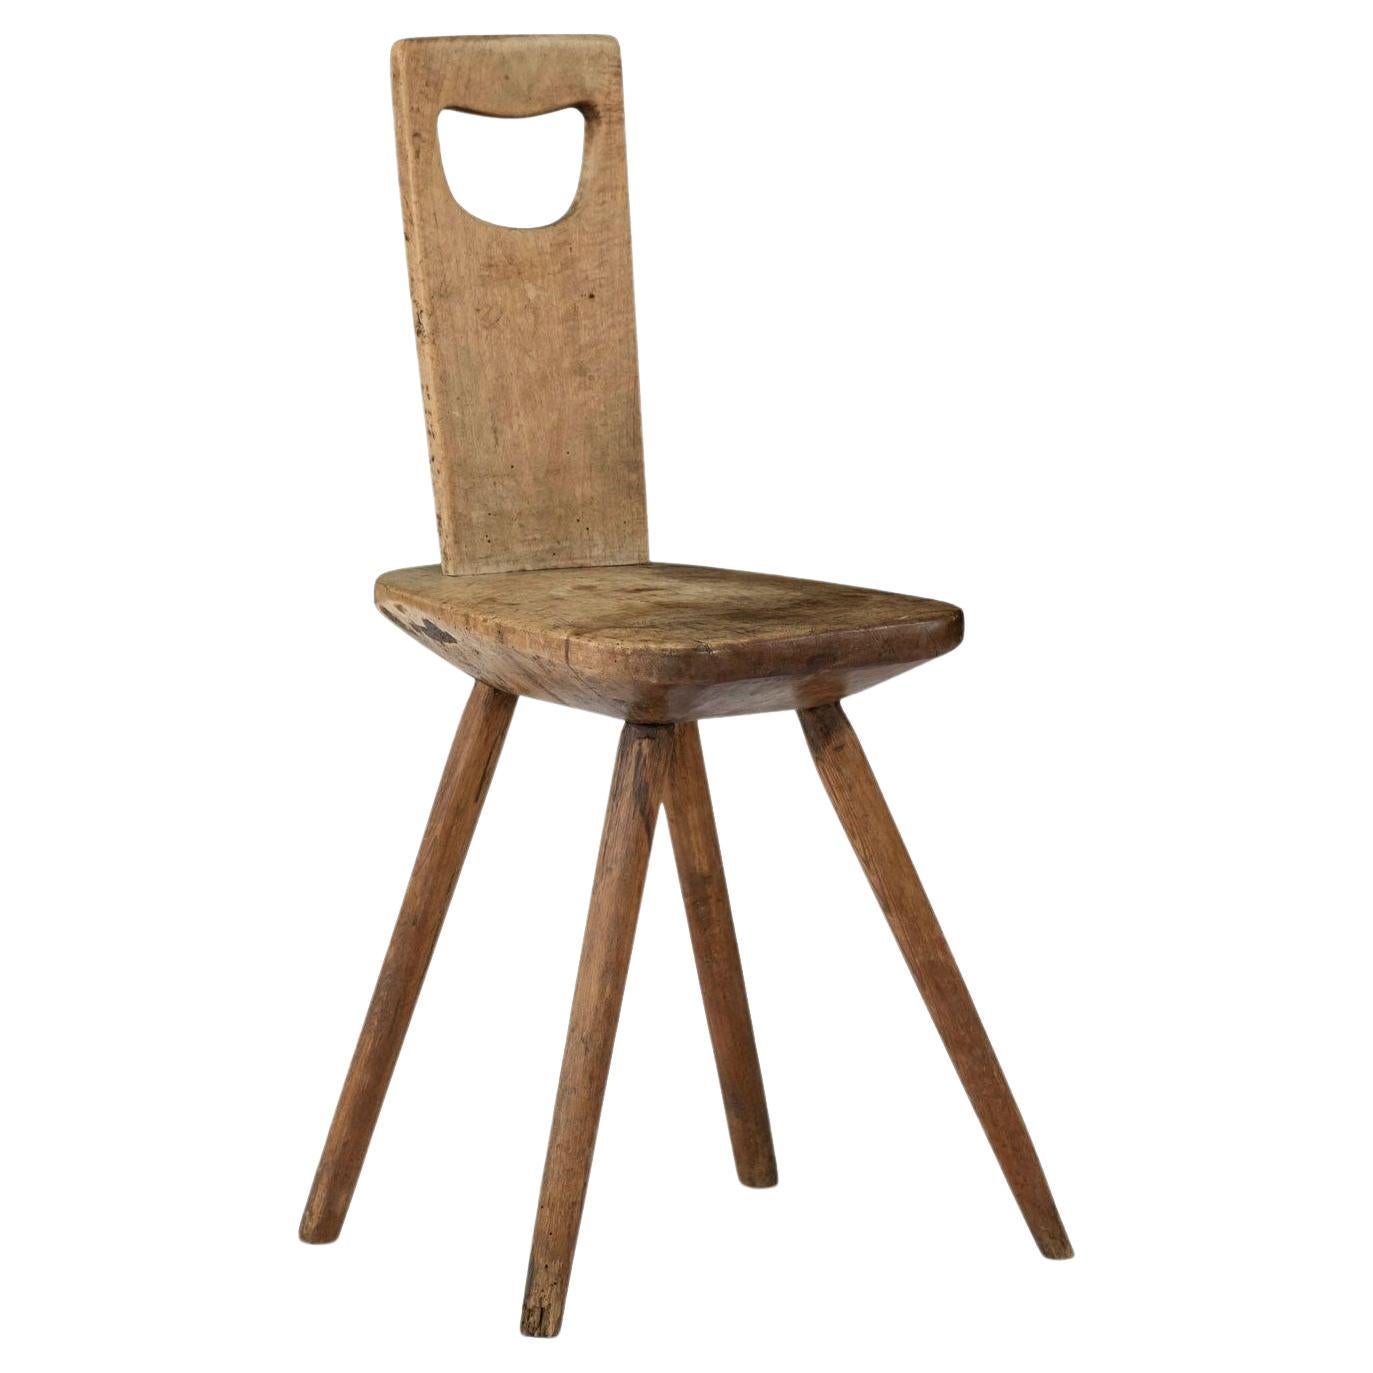 Charming Swedish Rustic Chair